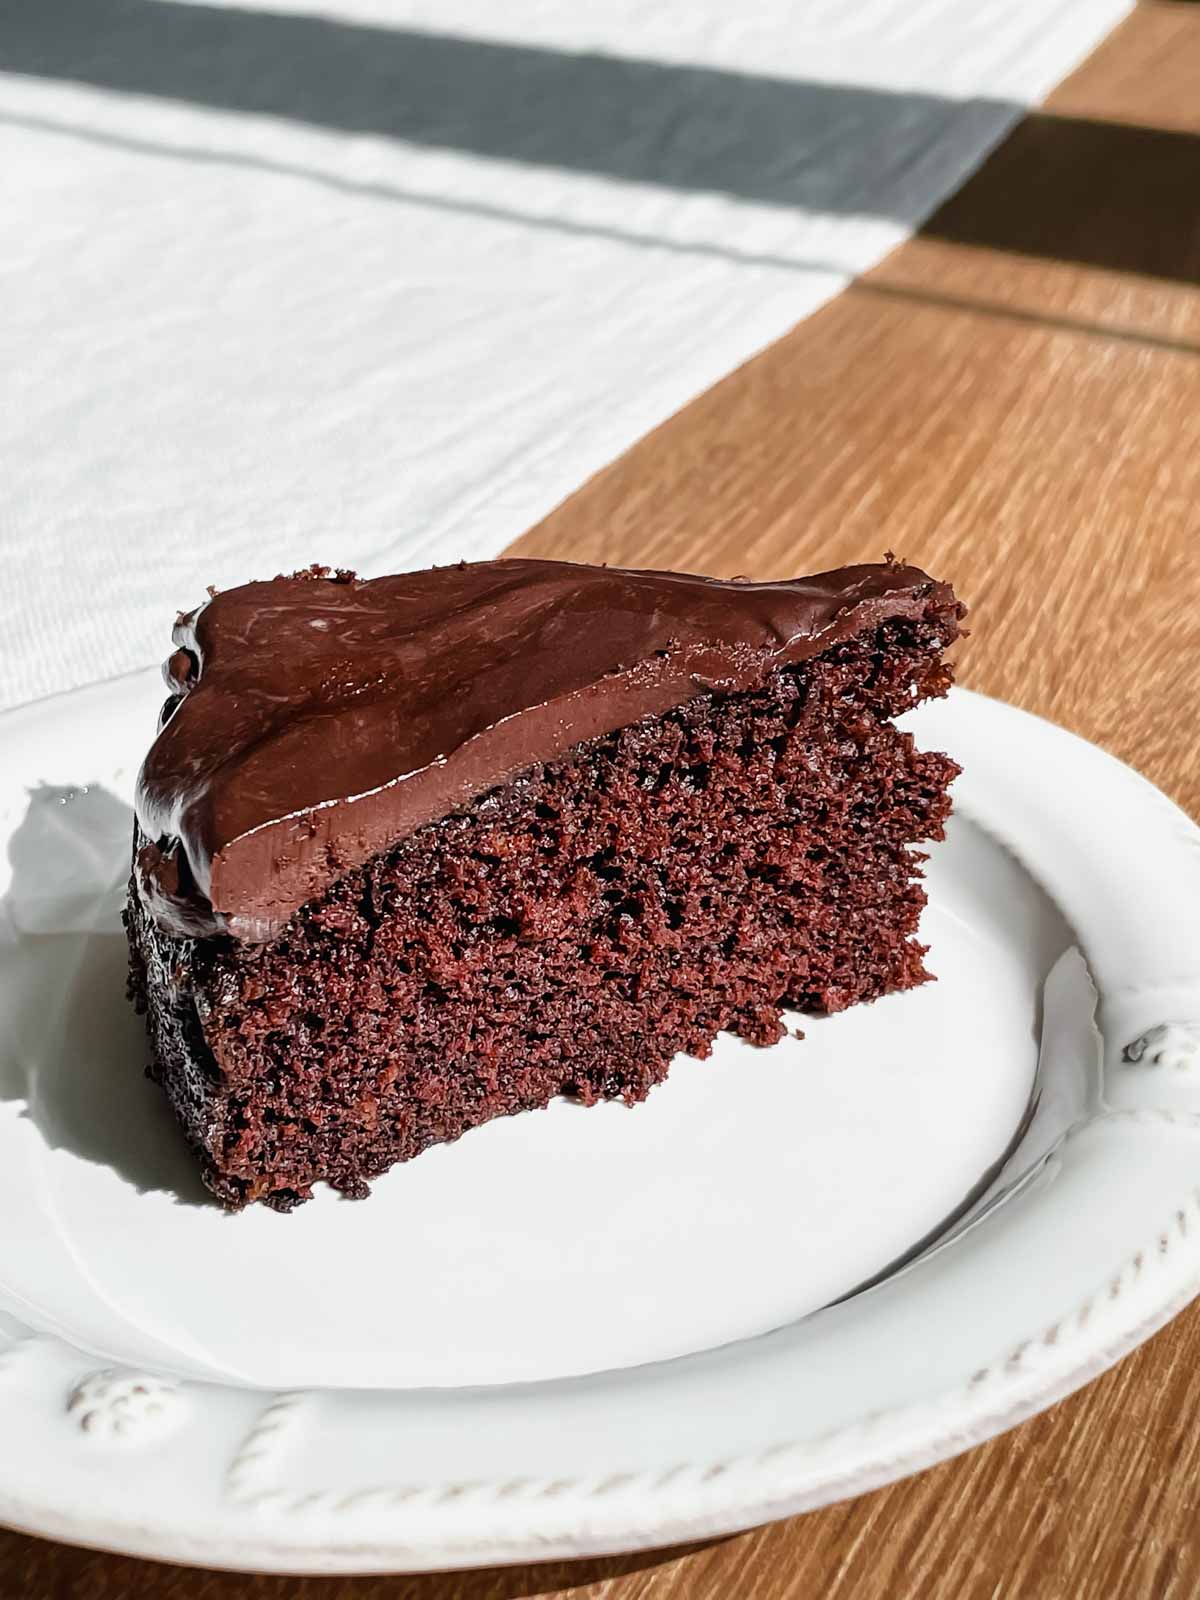 Small Chocolate Cake (6 Inch) - Sally's Baking Addiction